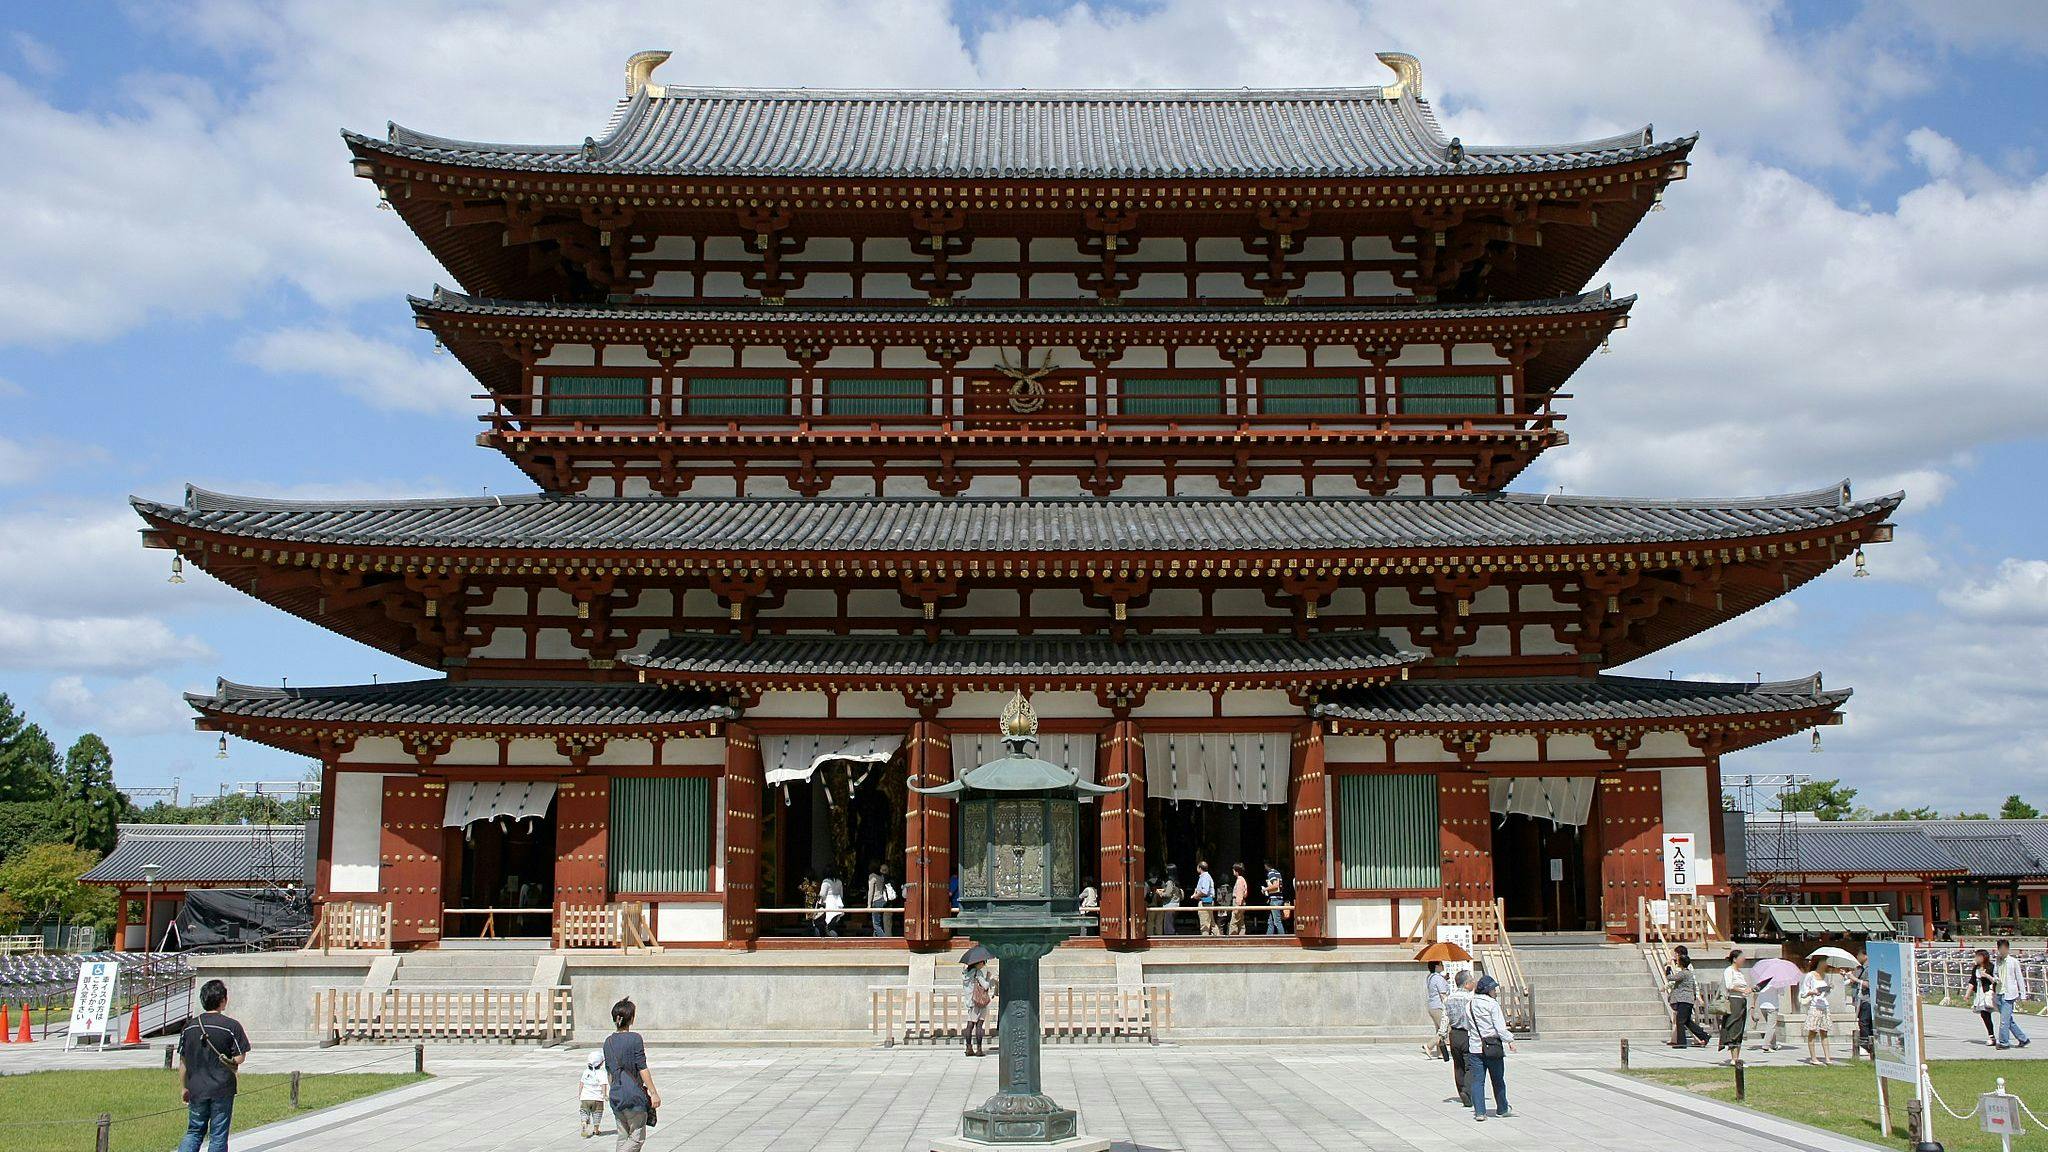 Yakushi-ji is a Buddhist temple in Nara, Japan